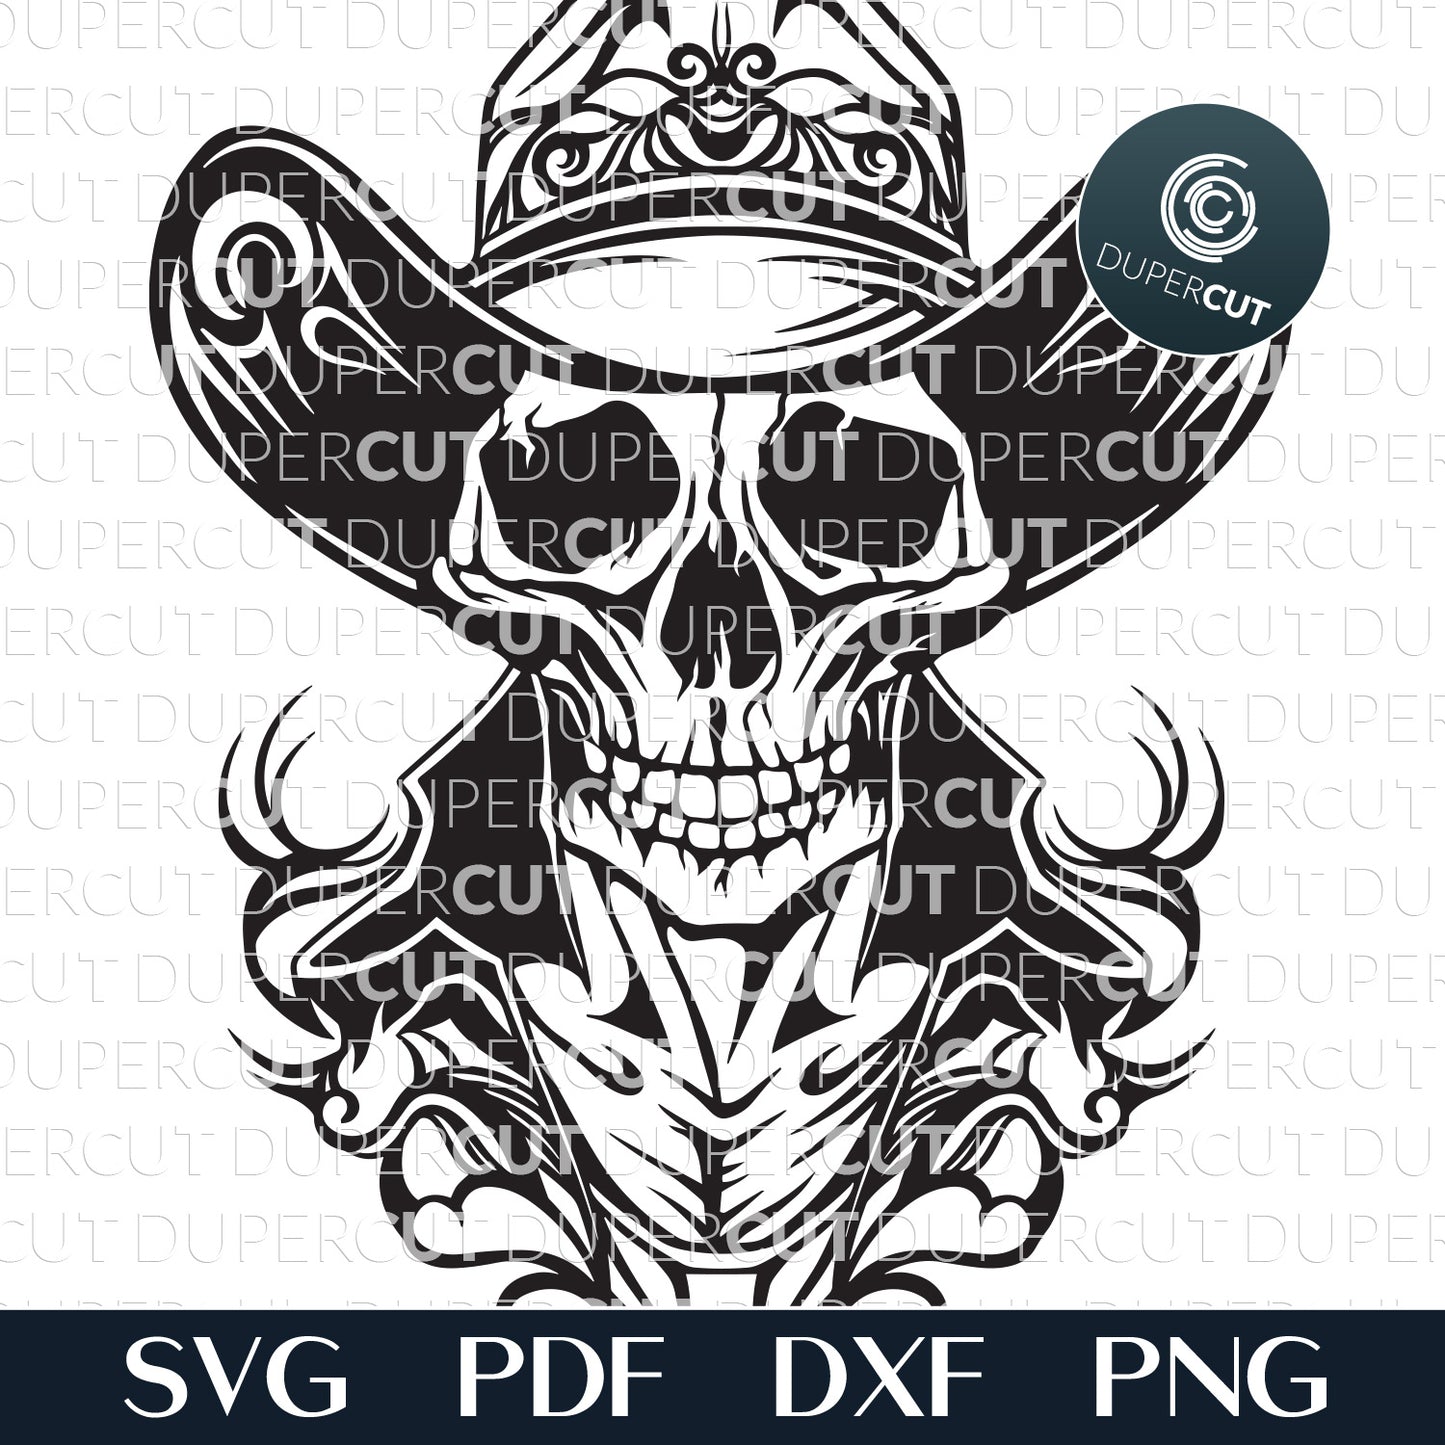 Skull cowboy black and white cut file - SVG DXF vector files for Glowforge, Cricut, Silhouette, CNC plasma machines by www.DuperCut.com